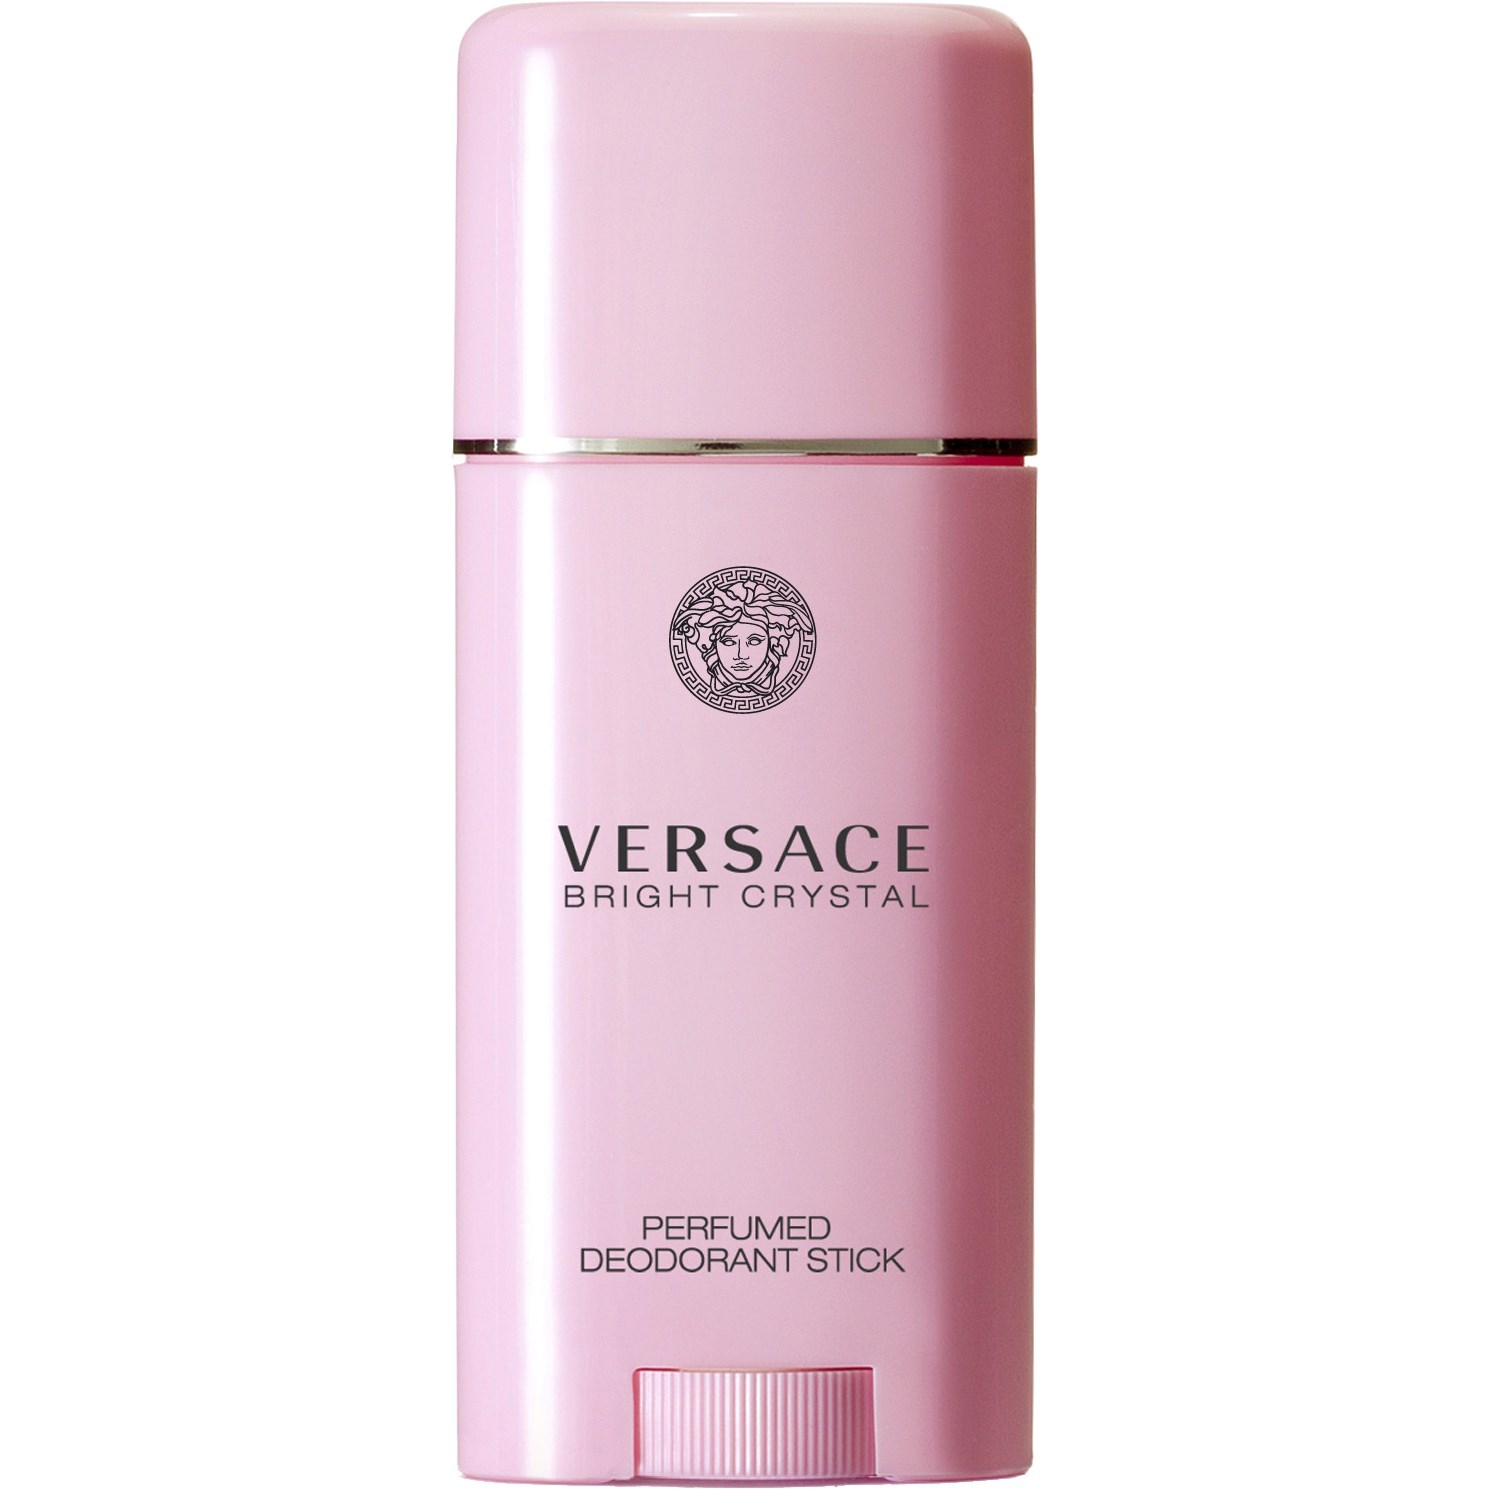 Zdjęcia - Dezodorant Versace Bright Crystal Deodorant Stick 50 ml 